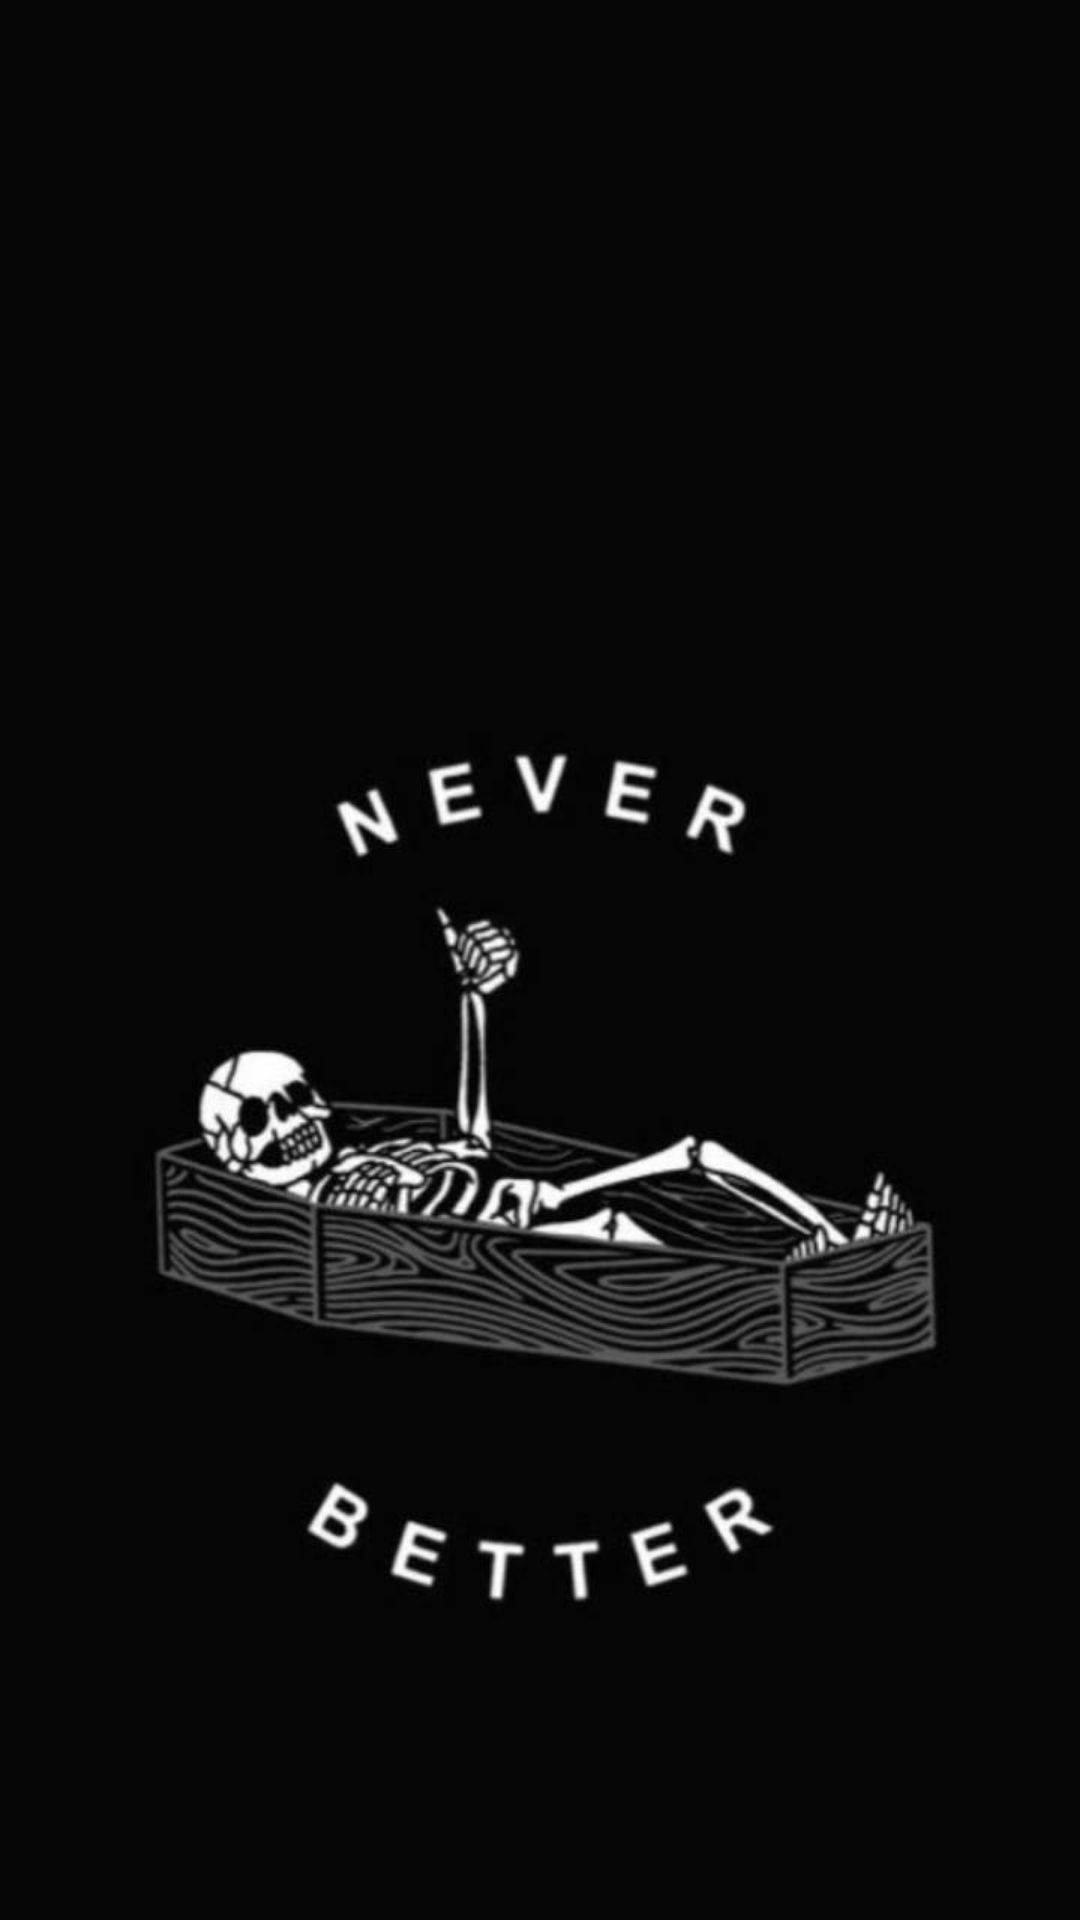 Skeleton Meme Coffin Background